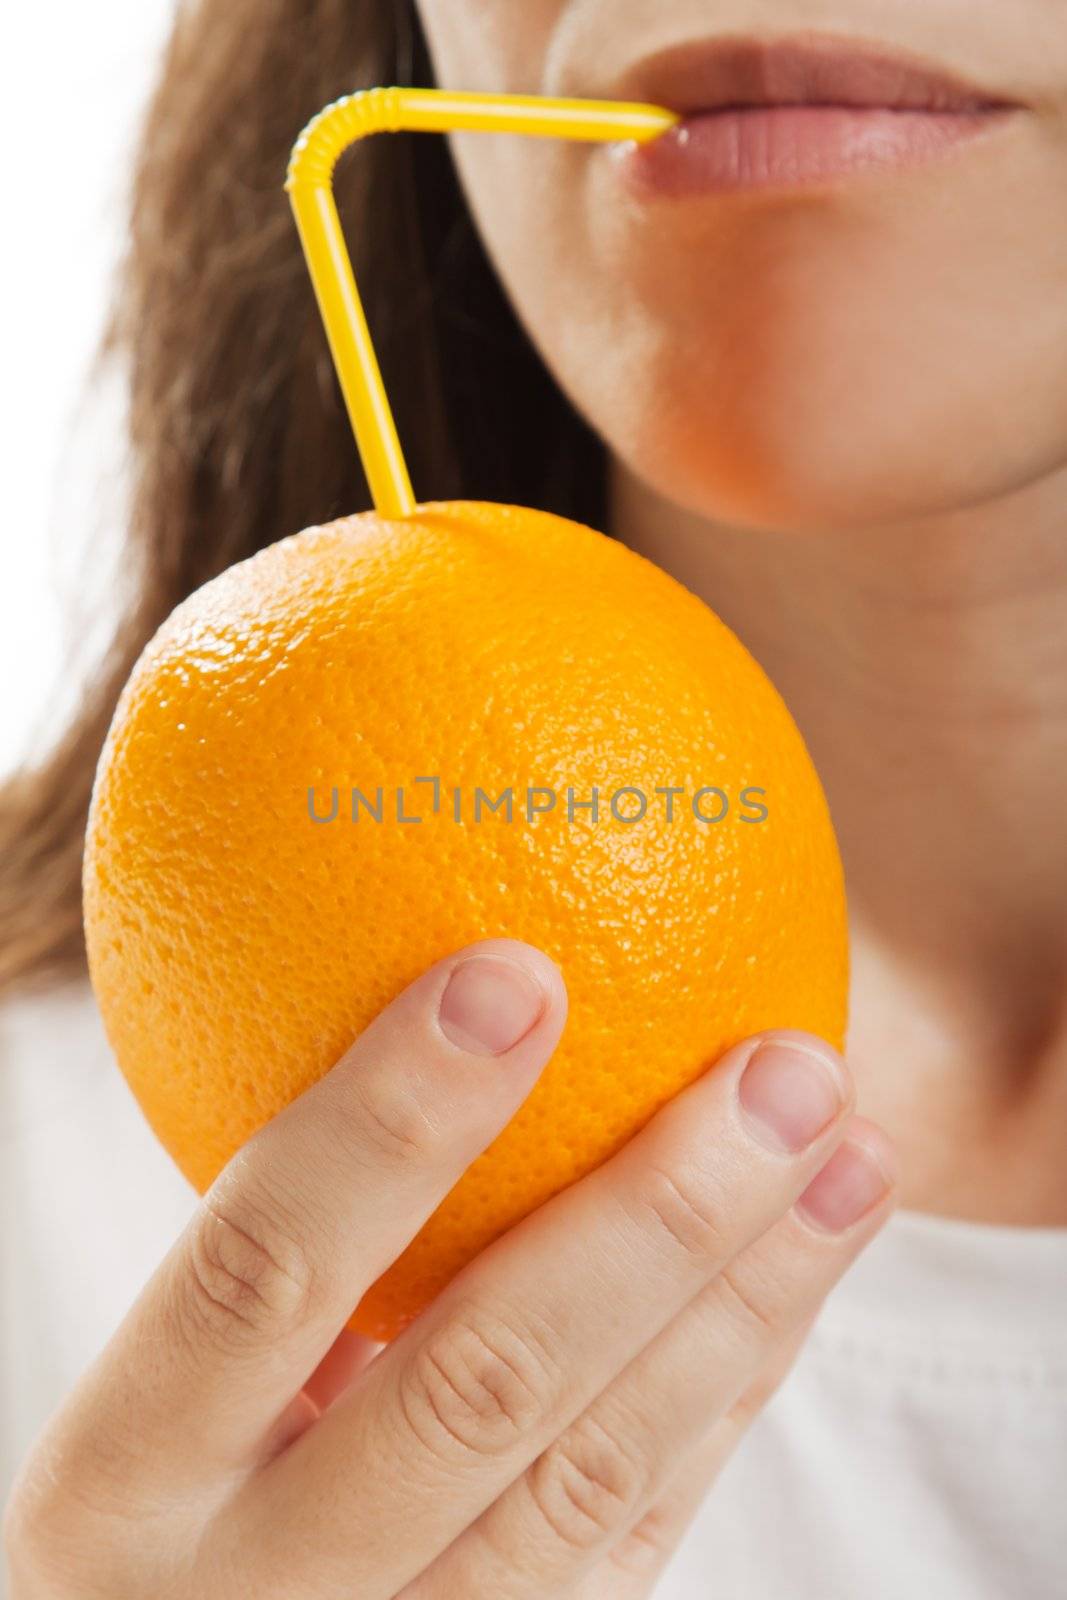 Women hold healthy eating orange fruit juice drink